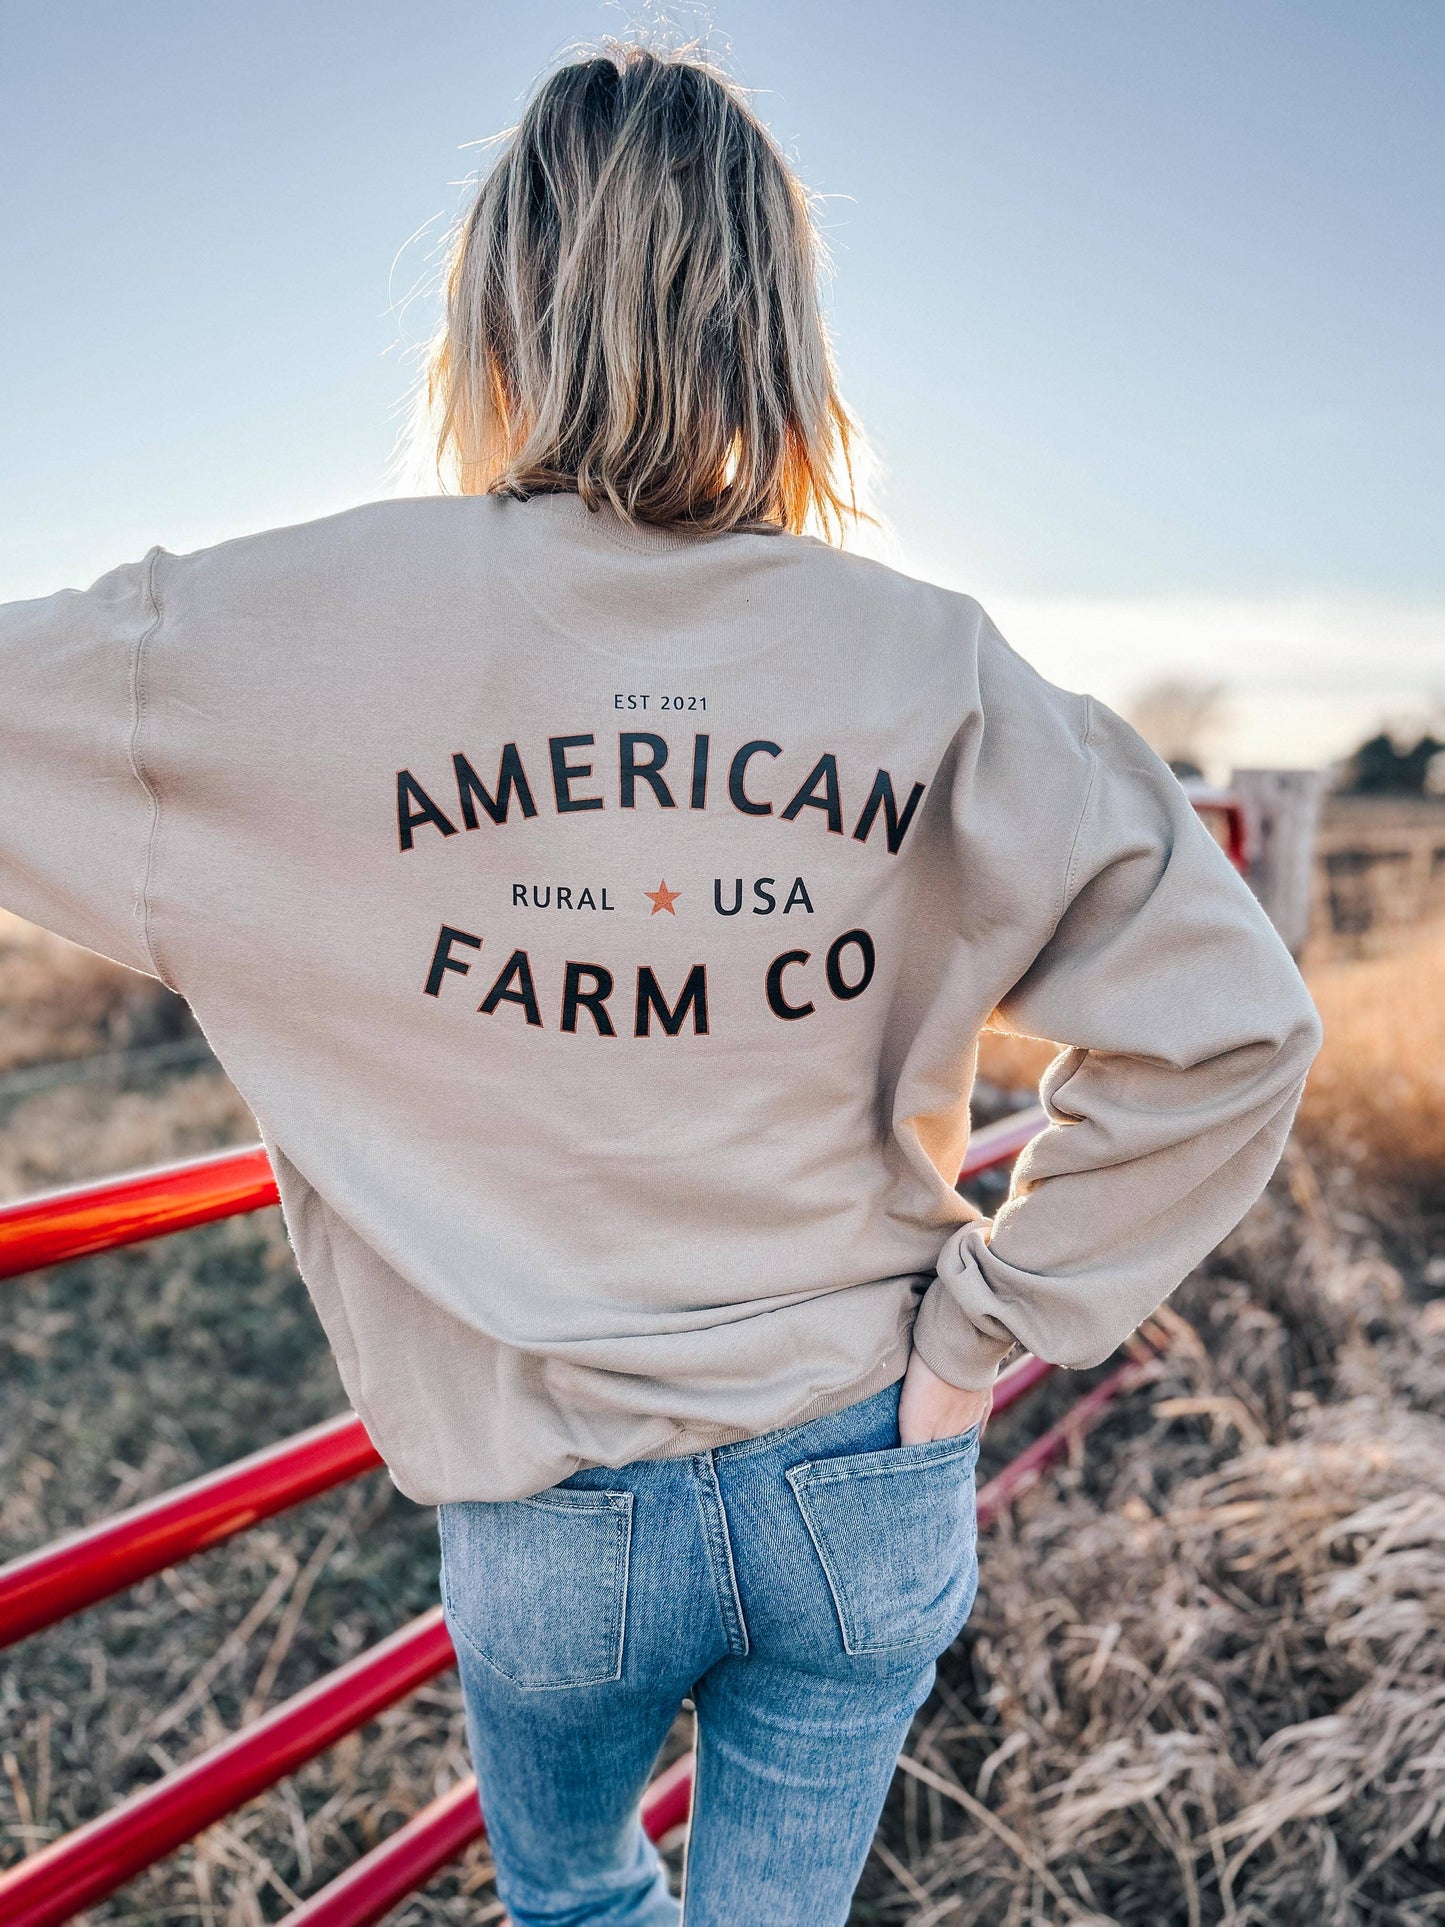 Western ‘American Farm Co' Rural USA Crew, The Feathered Farmhouse